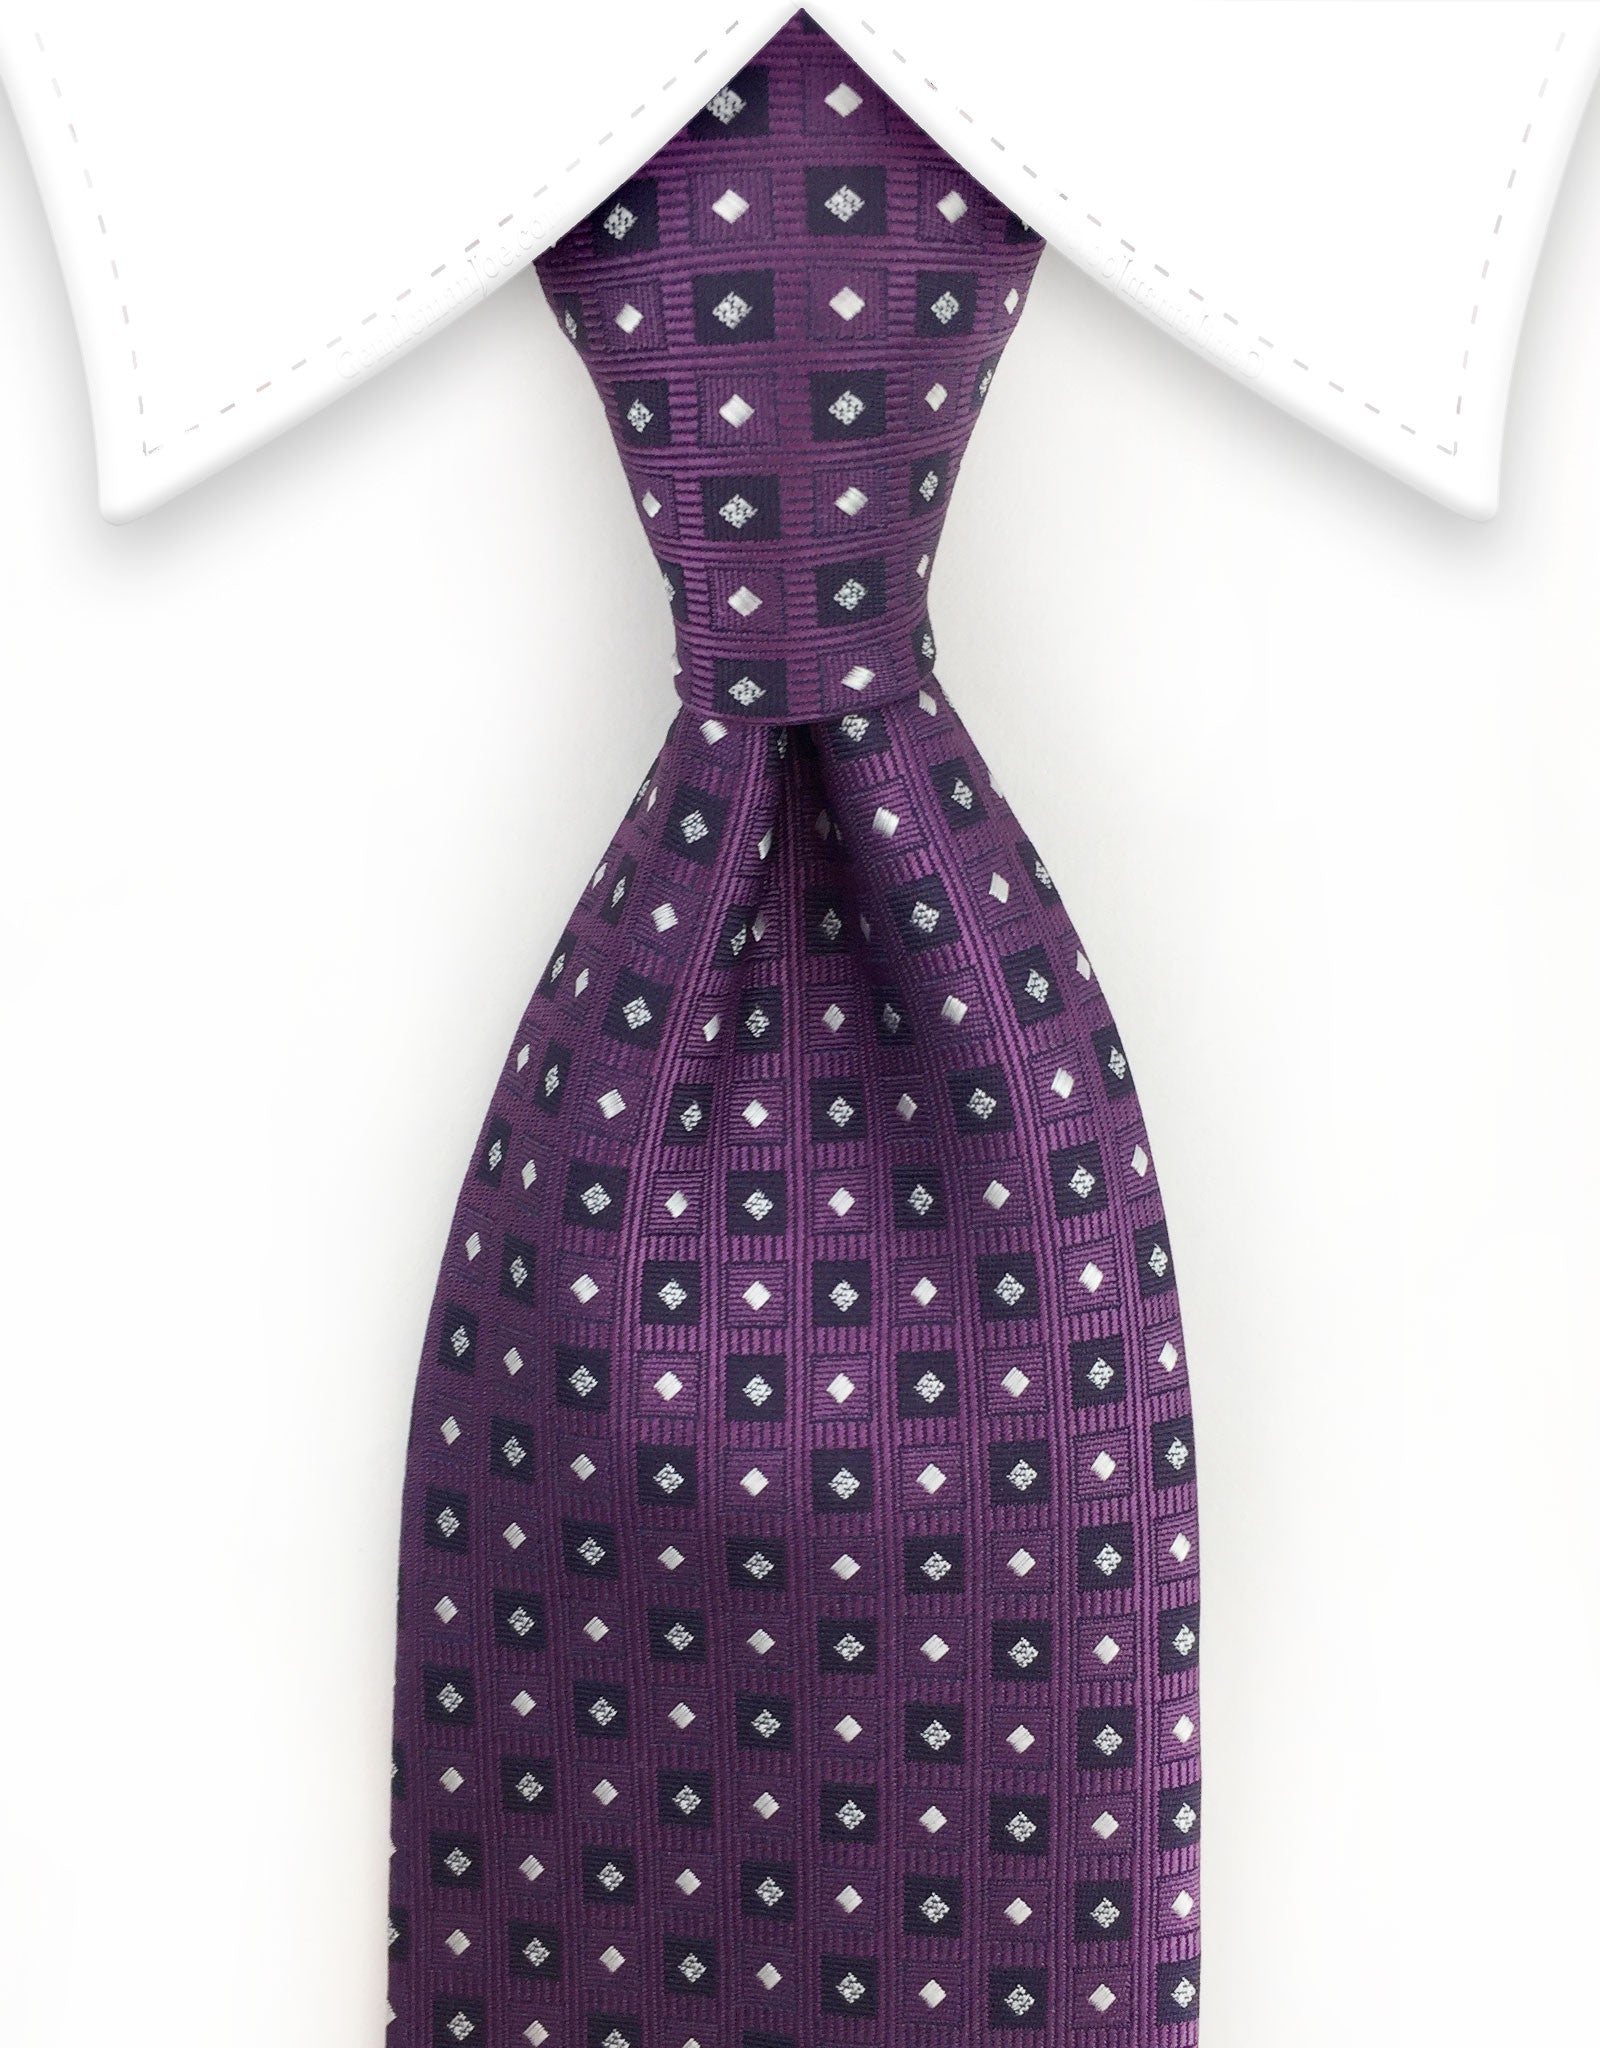 Grape purple tie with motif